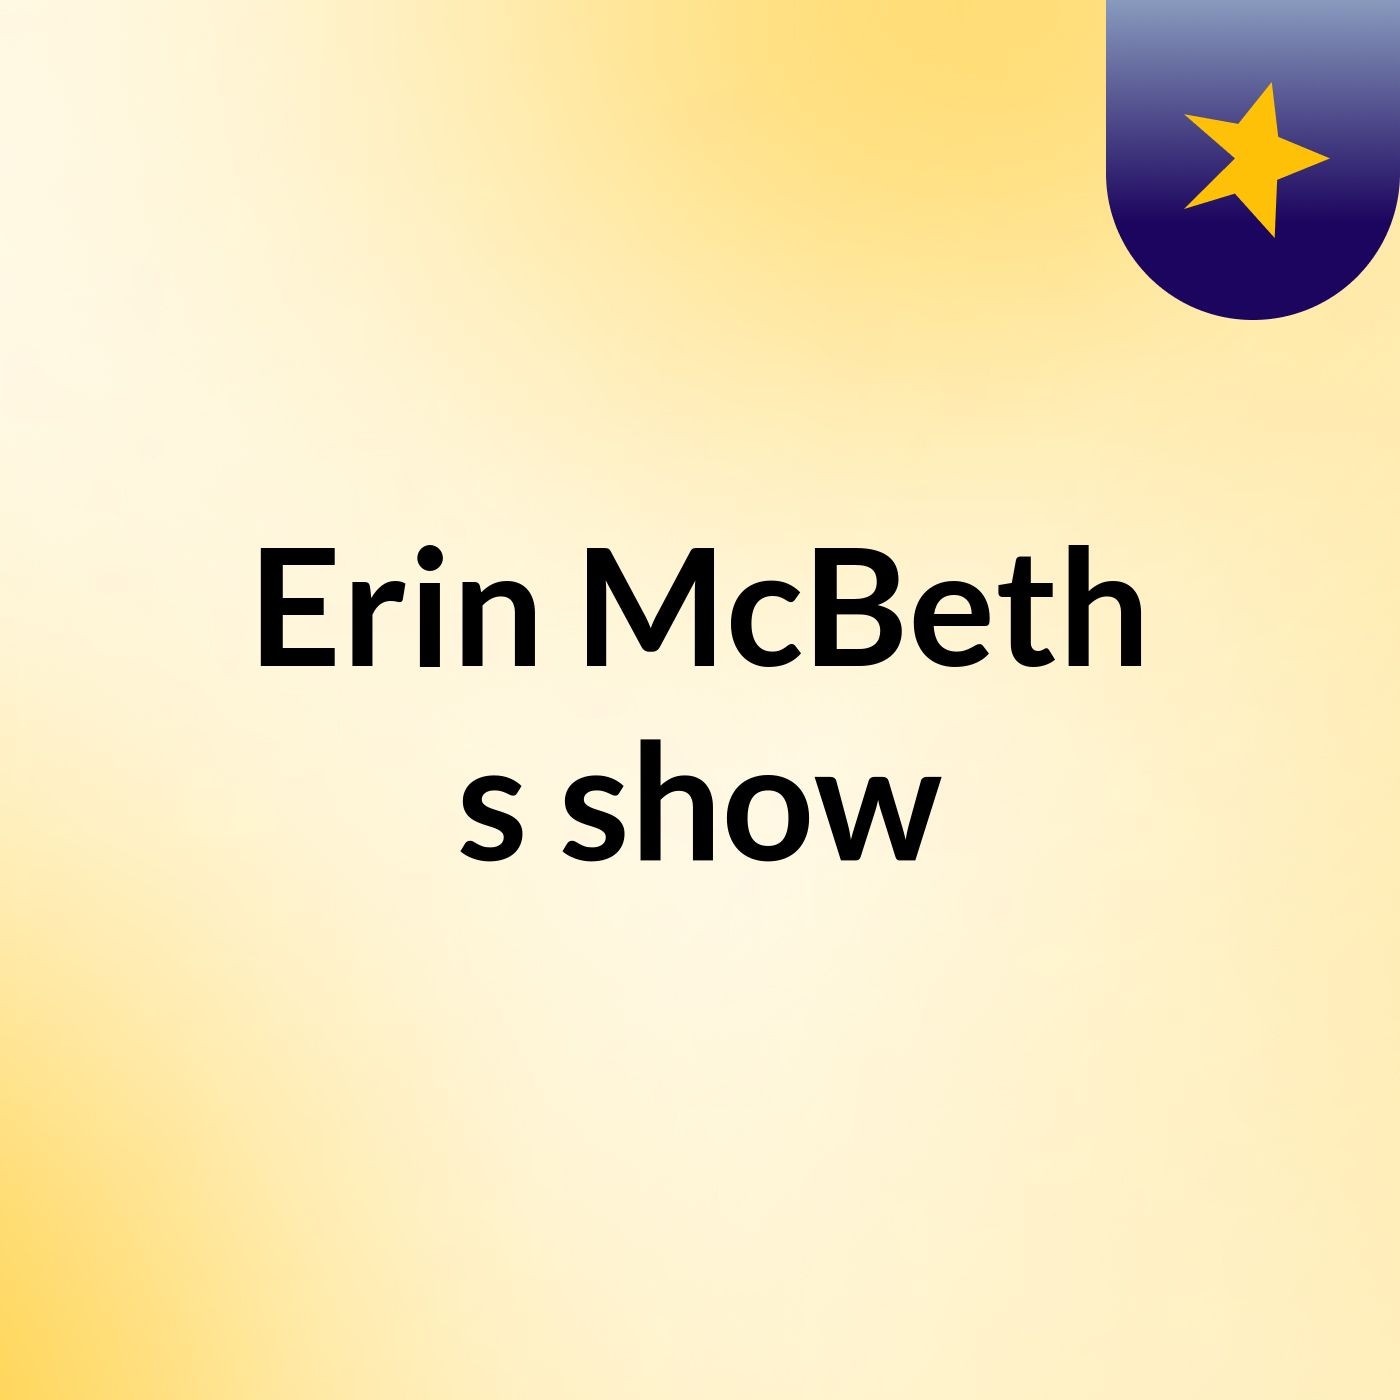 Erin McBeth's show